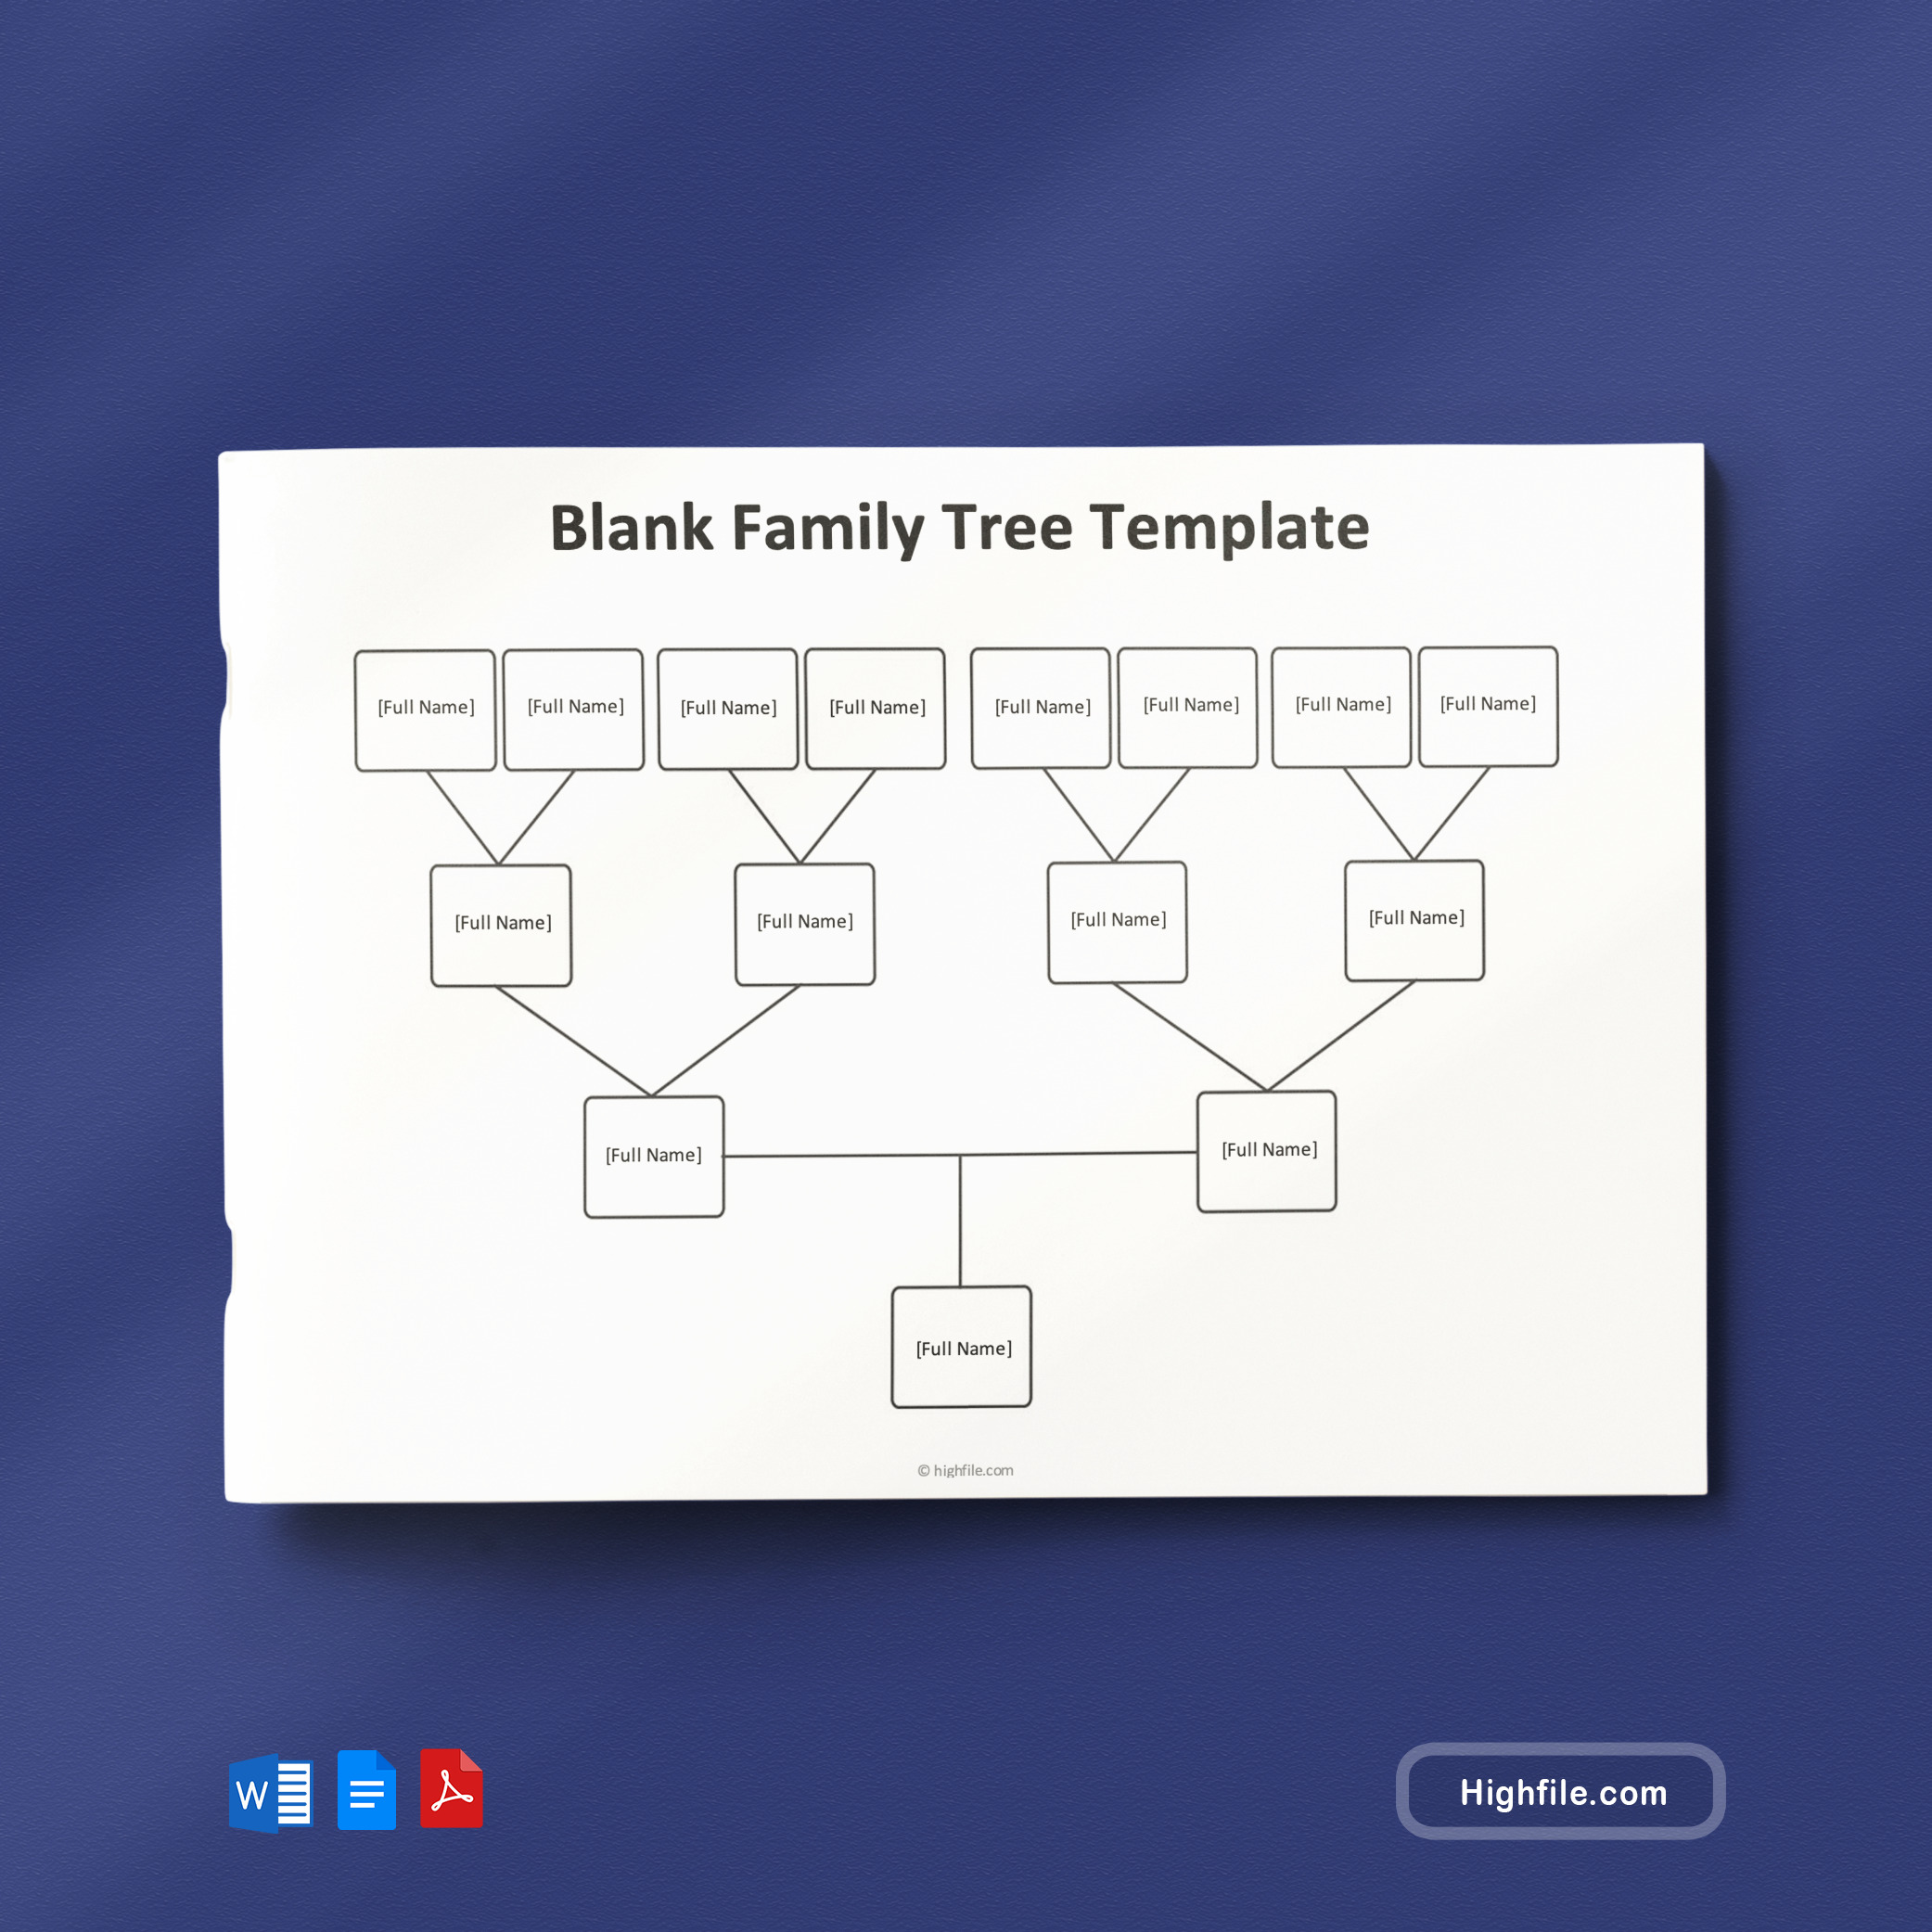 Blank Family Tree Template - Word, Google Docs, PDF